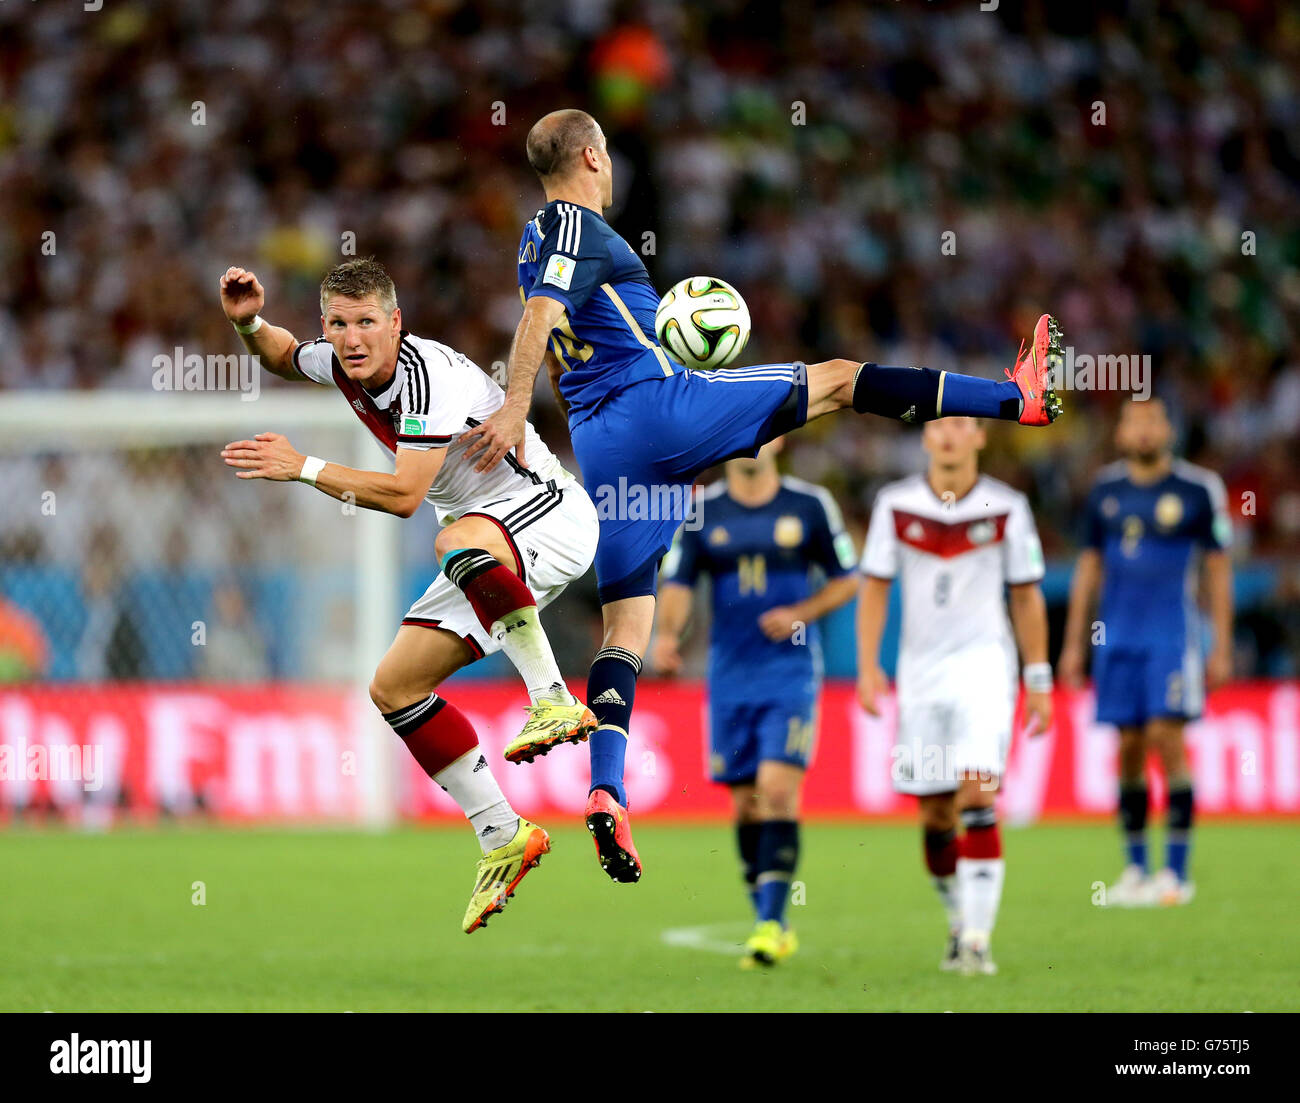 Soccer - FIFA World Cup 2014 - Final - Germany v Argentina - Estadio do Maracana. Germany's Bastian Schweinsteiger (left) and Argentina's Rodrigo Palacio battle for the ball Stock Photo